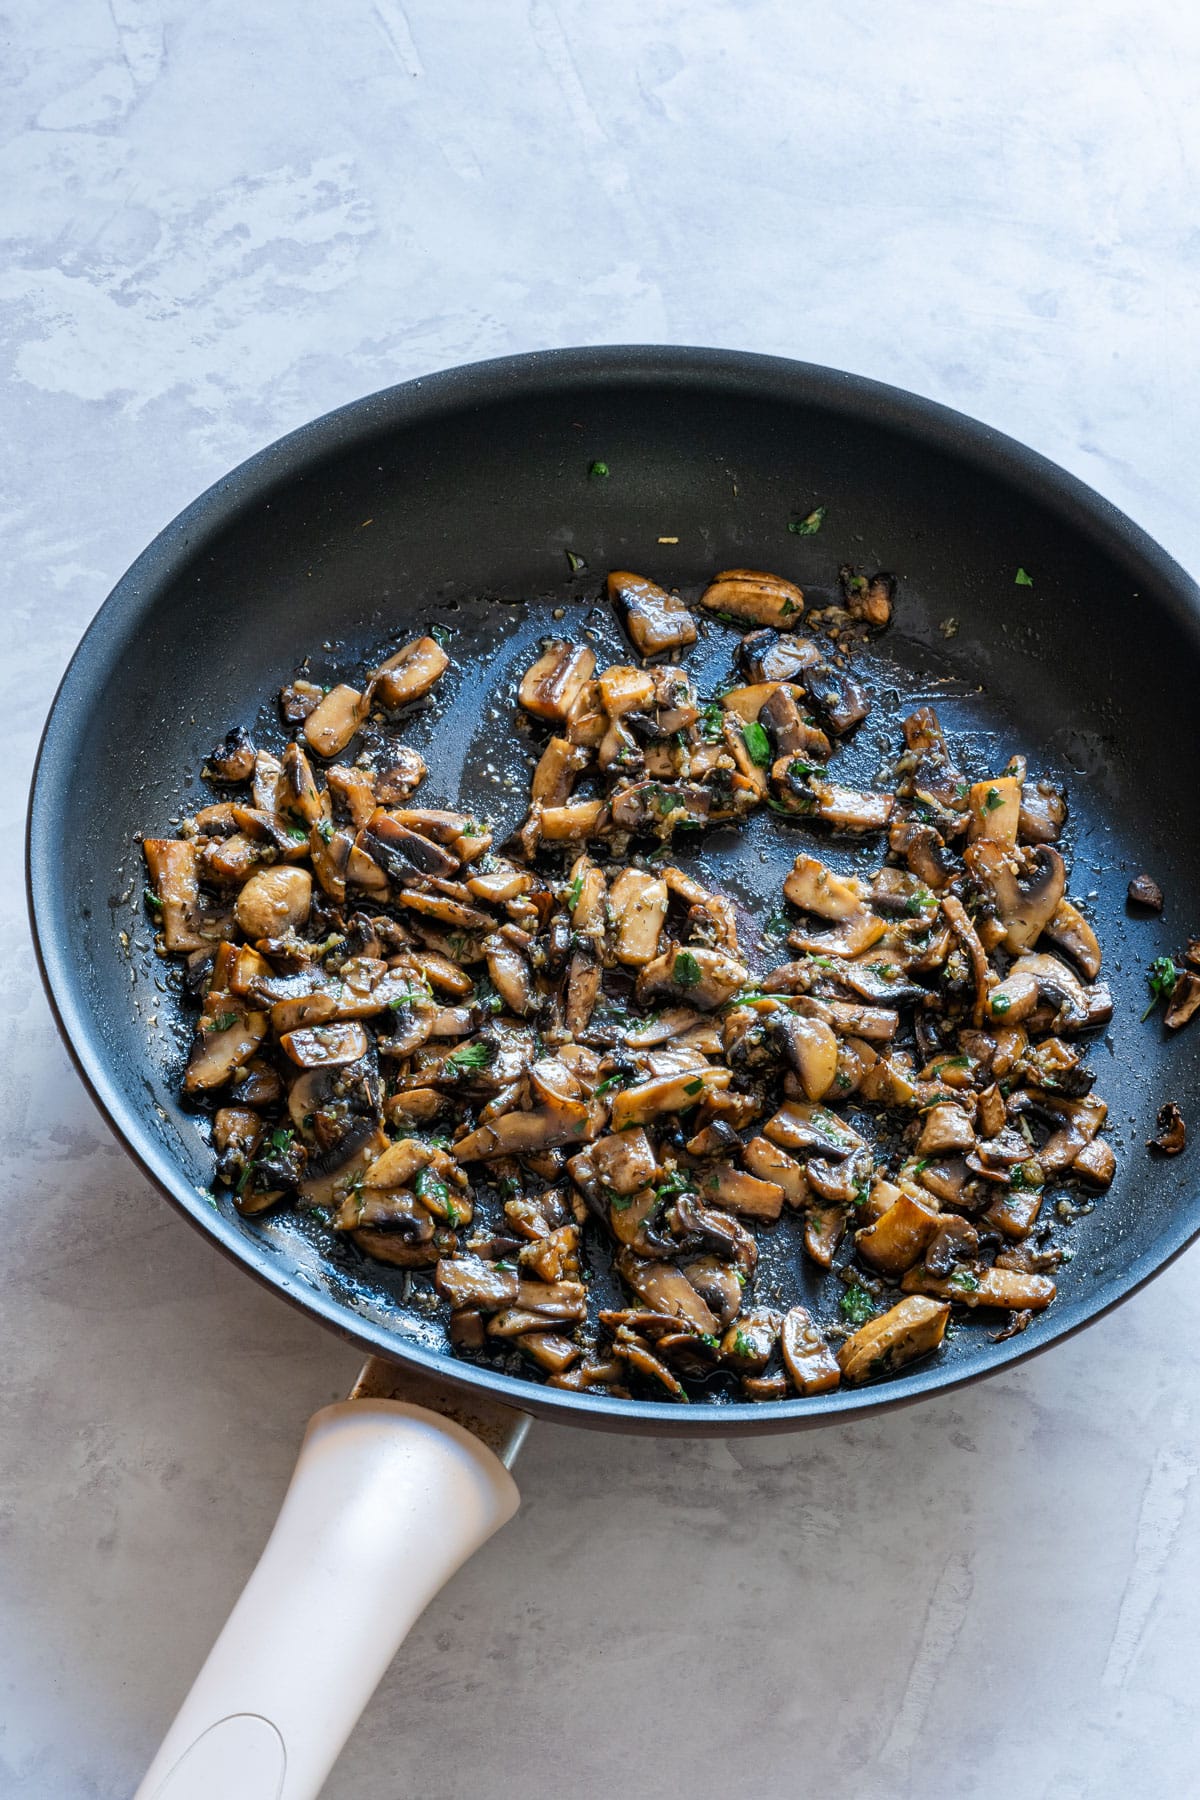 Sauteing mushrooms on a frying pan.